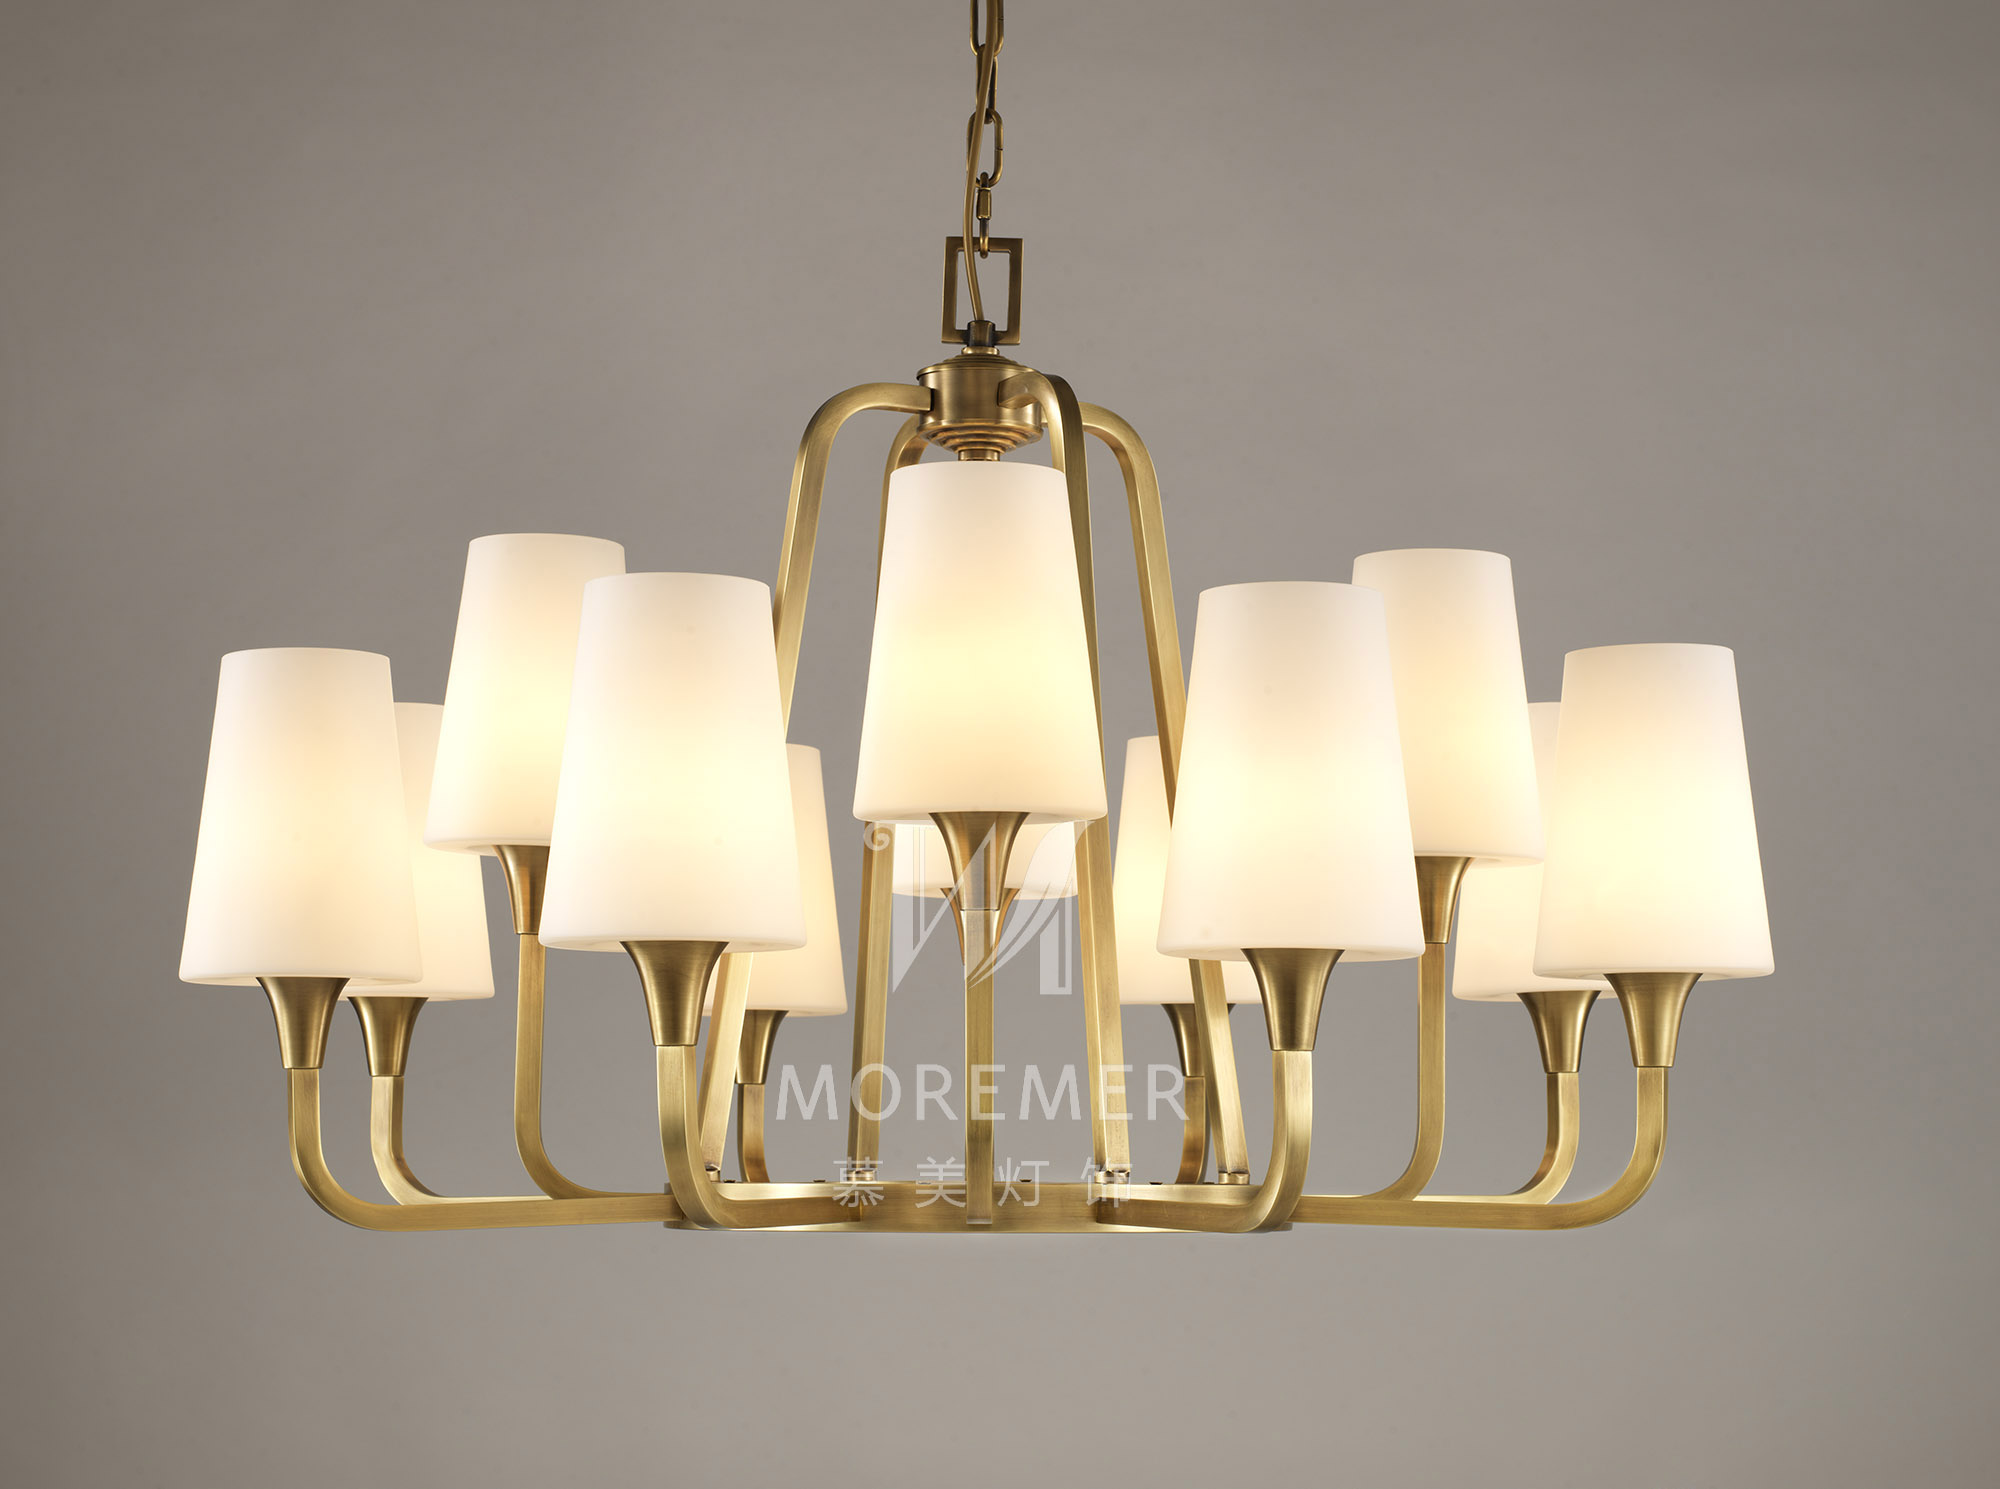 Qilang 17027304 American Series chandelier lamp Nocturne